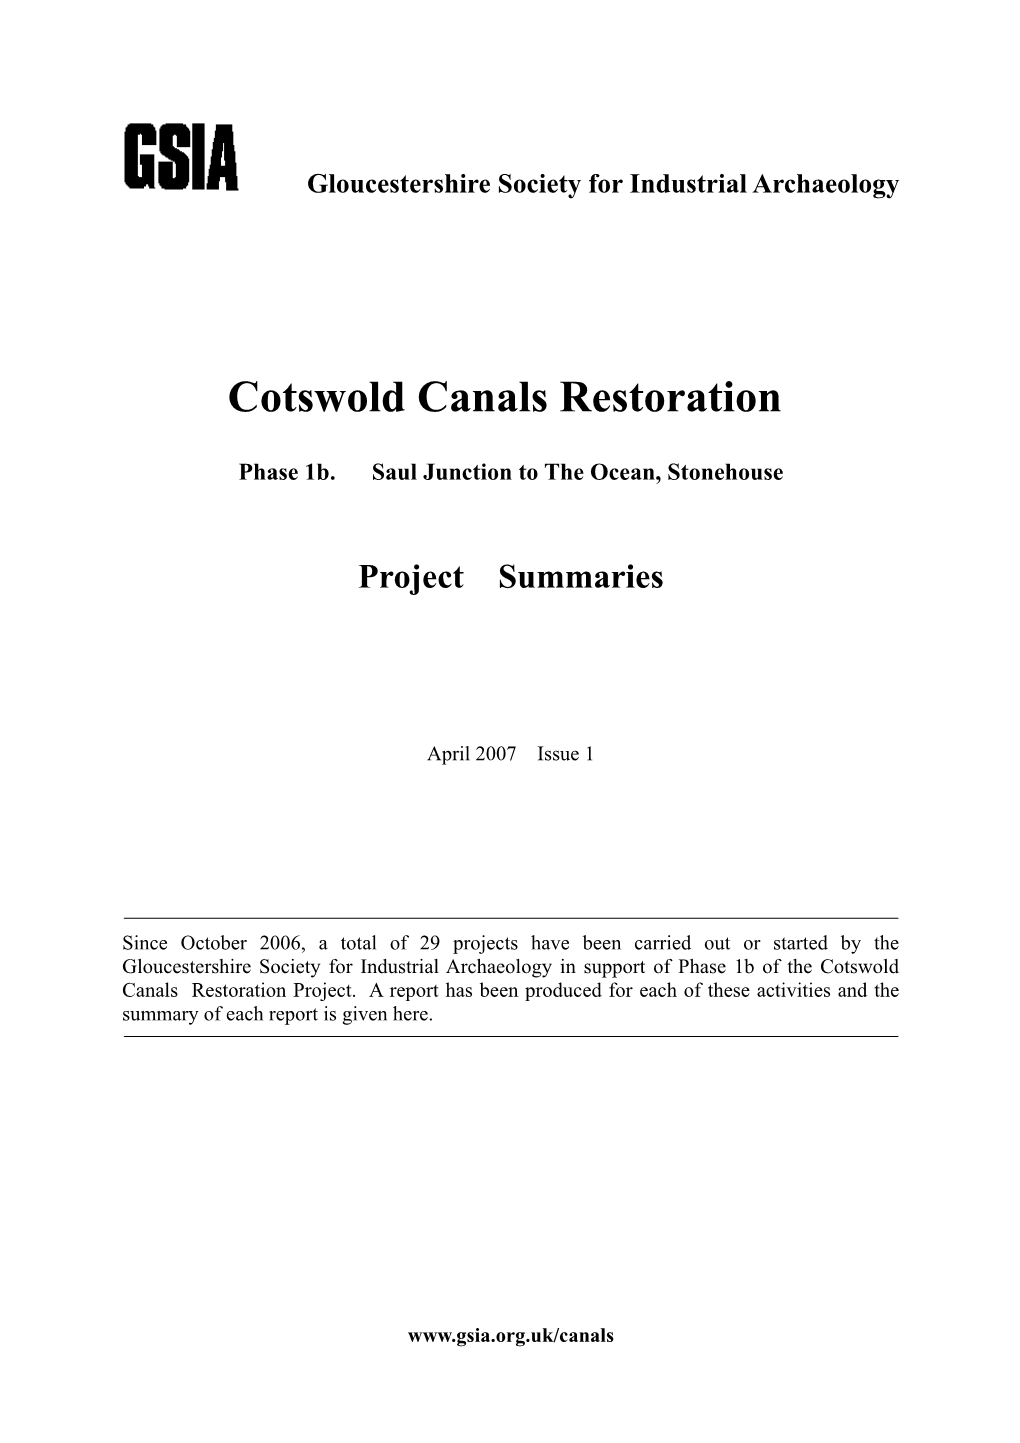 Cotswold Canals Restoration